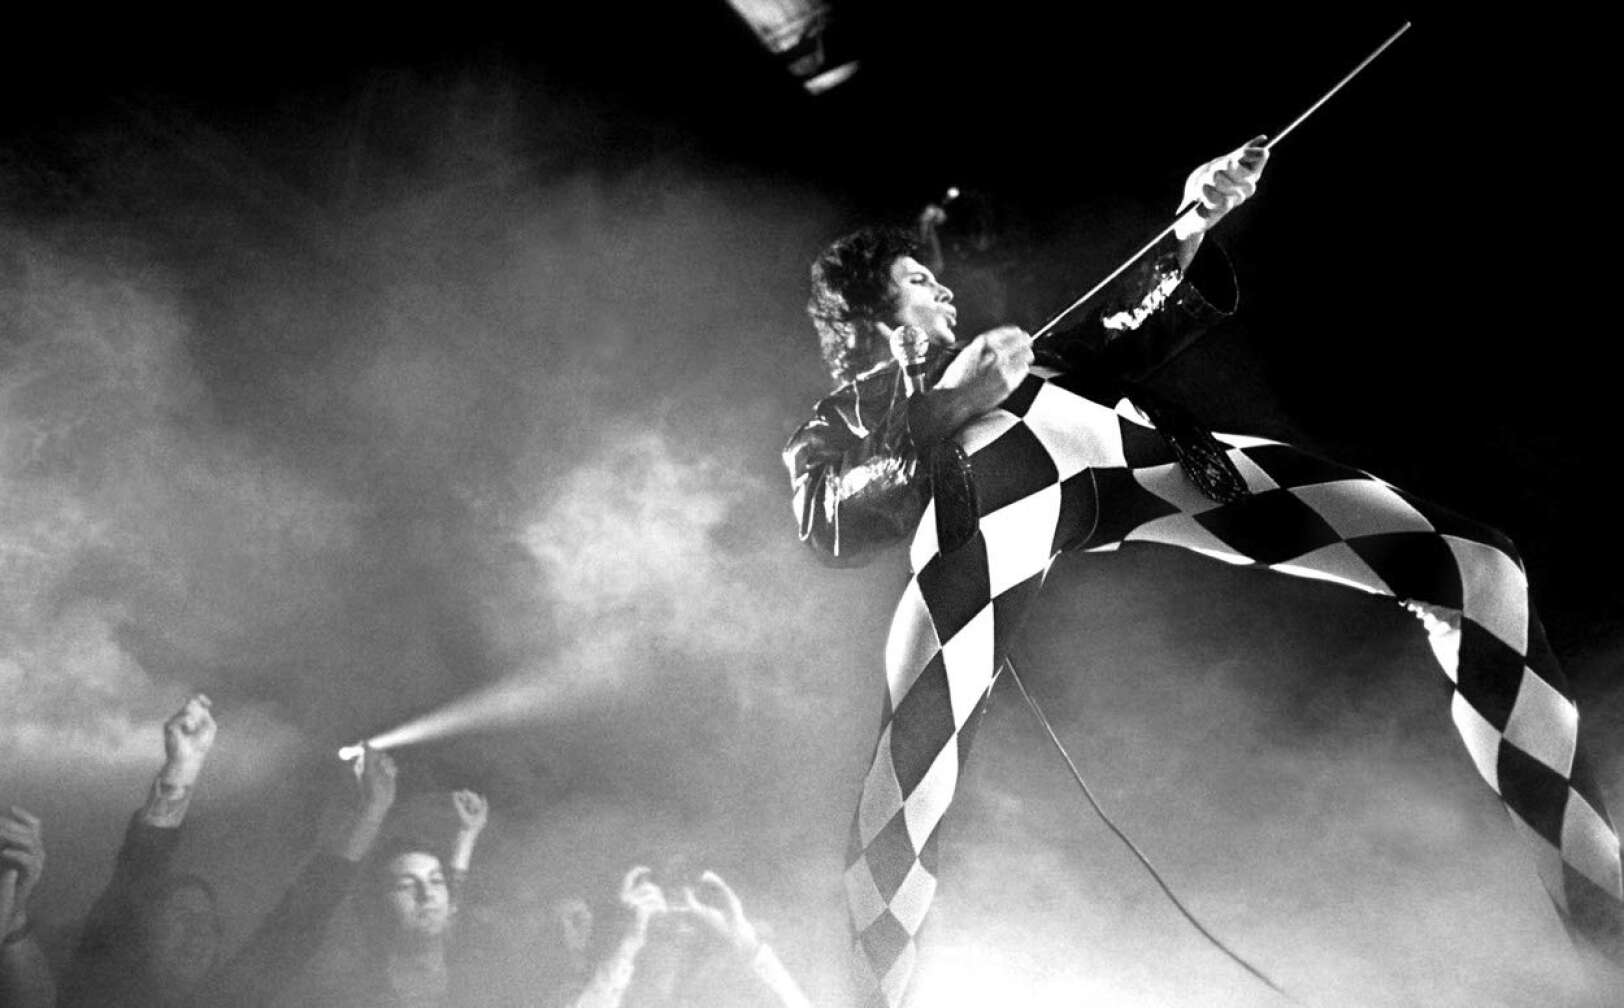 Queen-Foto aus "The Neal Preston Photographs"